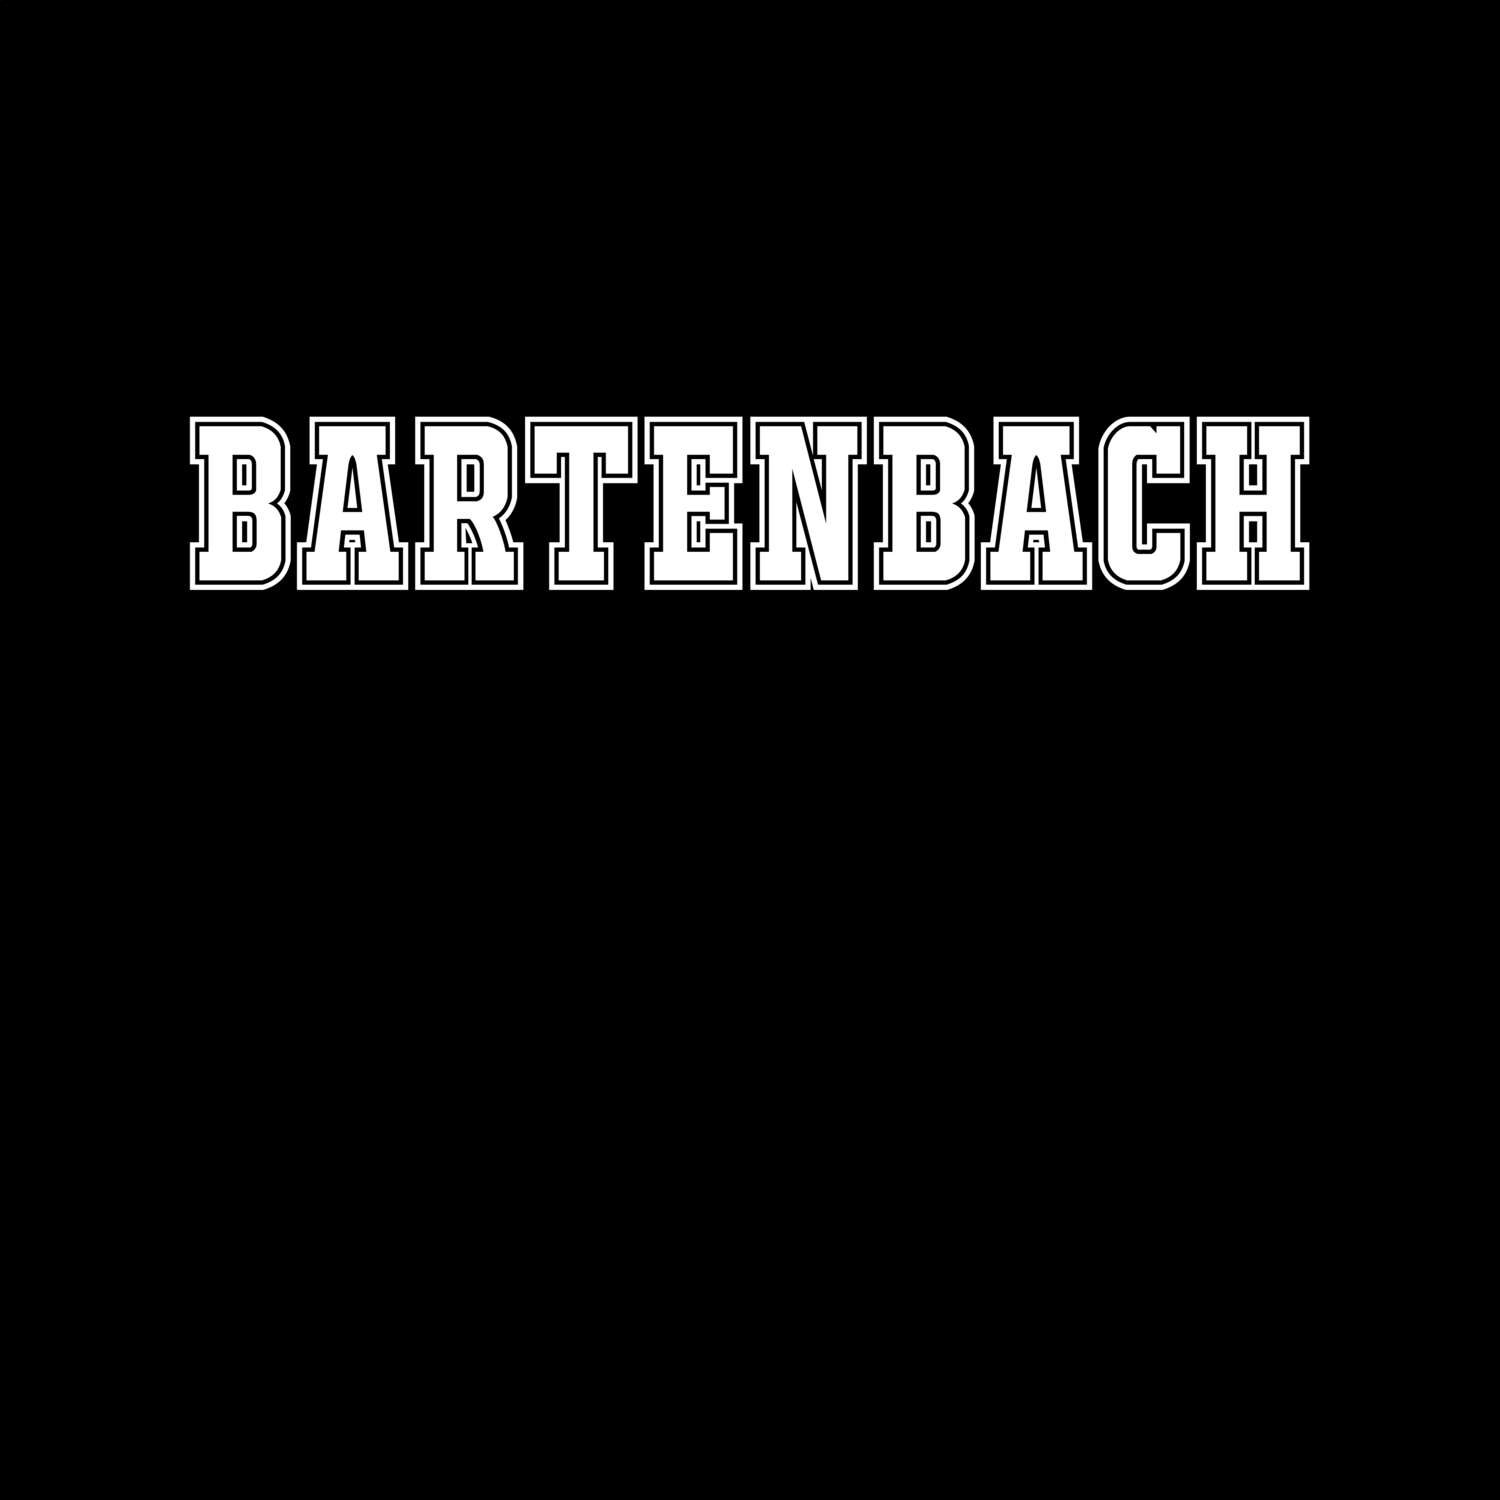 Bartenbach T-Shirt »Classic«